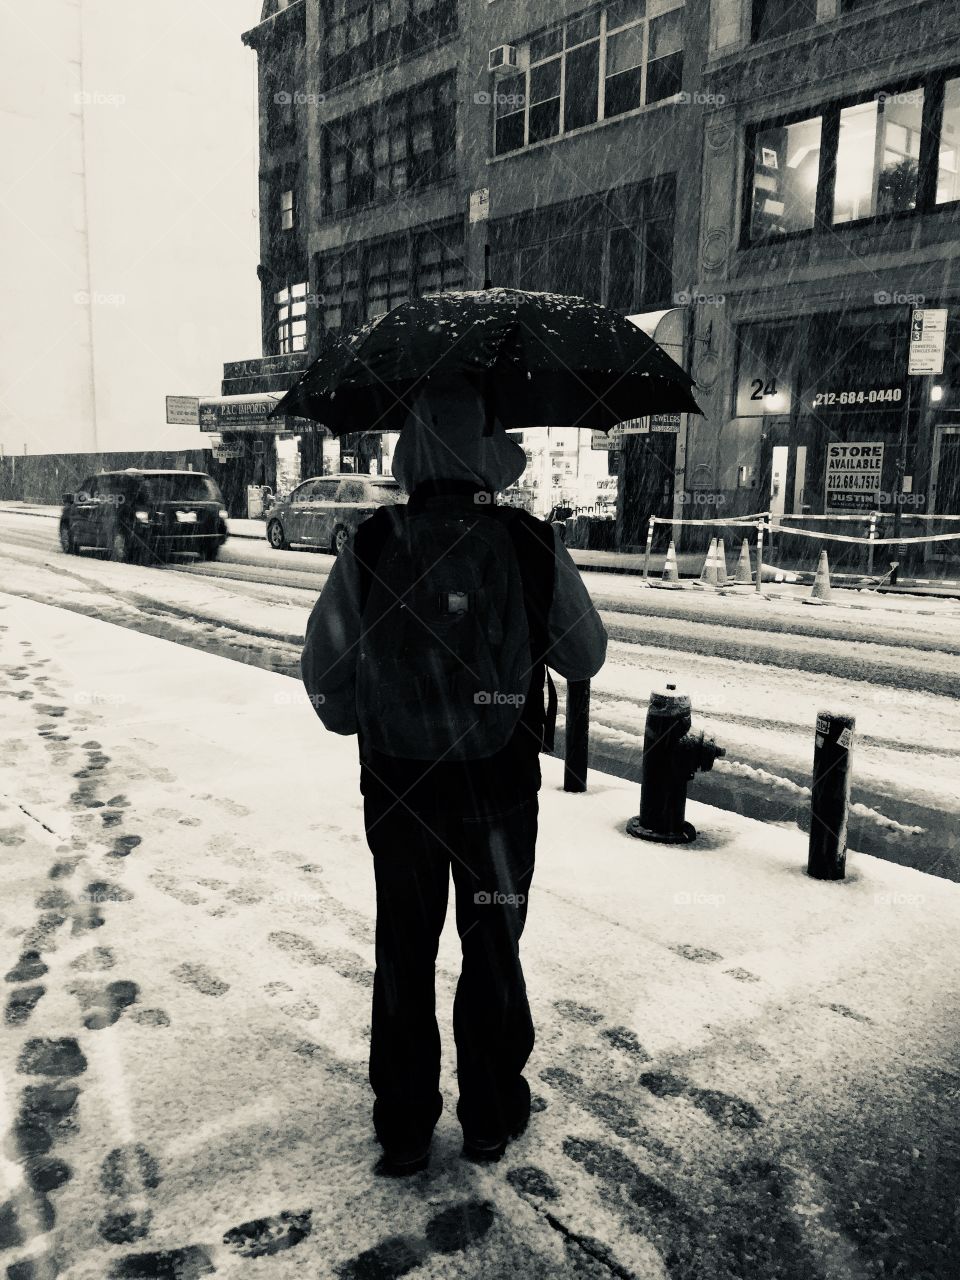 Snowy Days in NYC